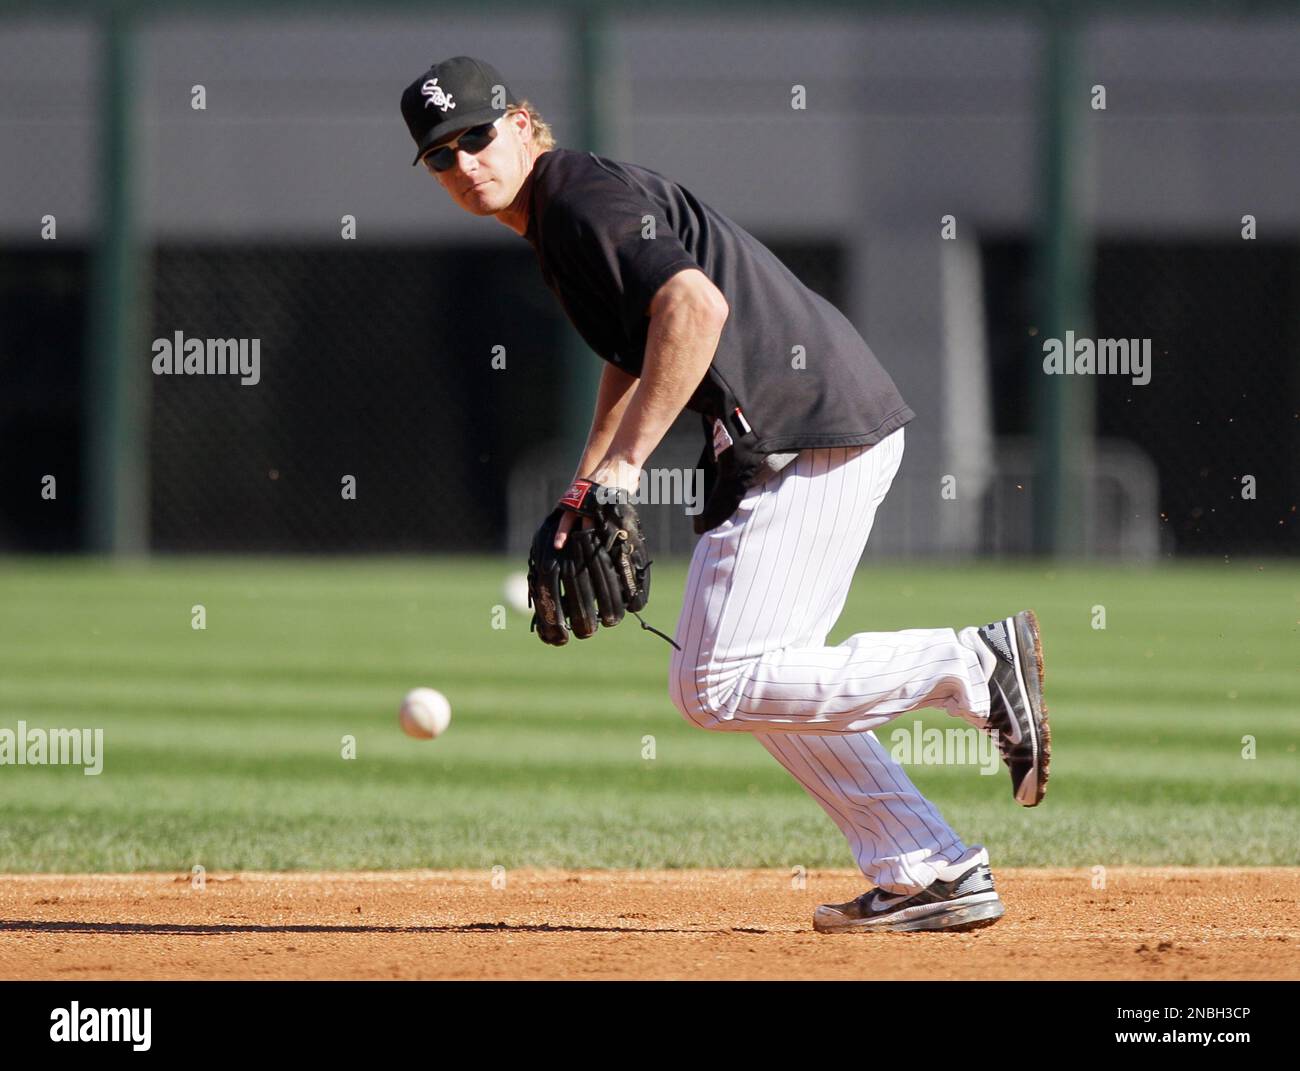 Chicago White Sox second baseman Gordon Beckham catches a ball